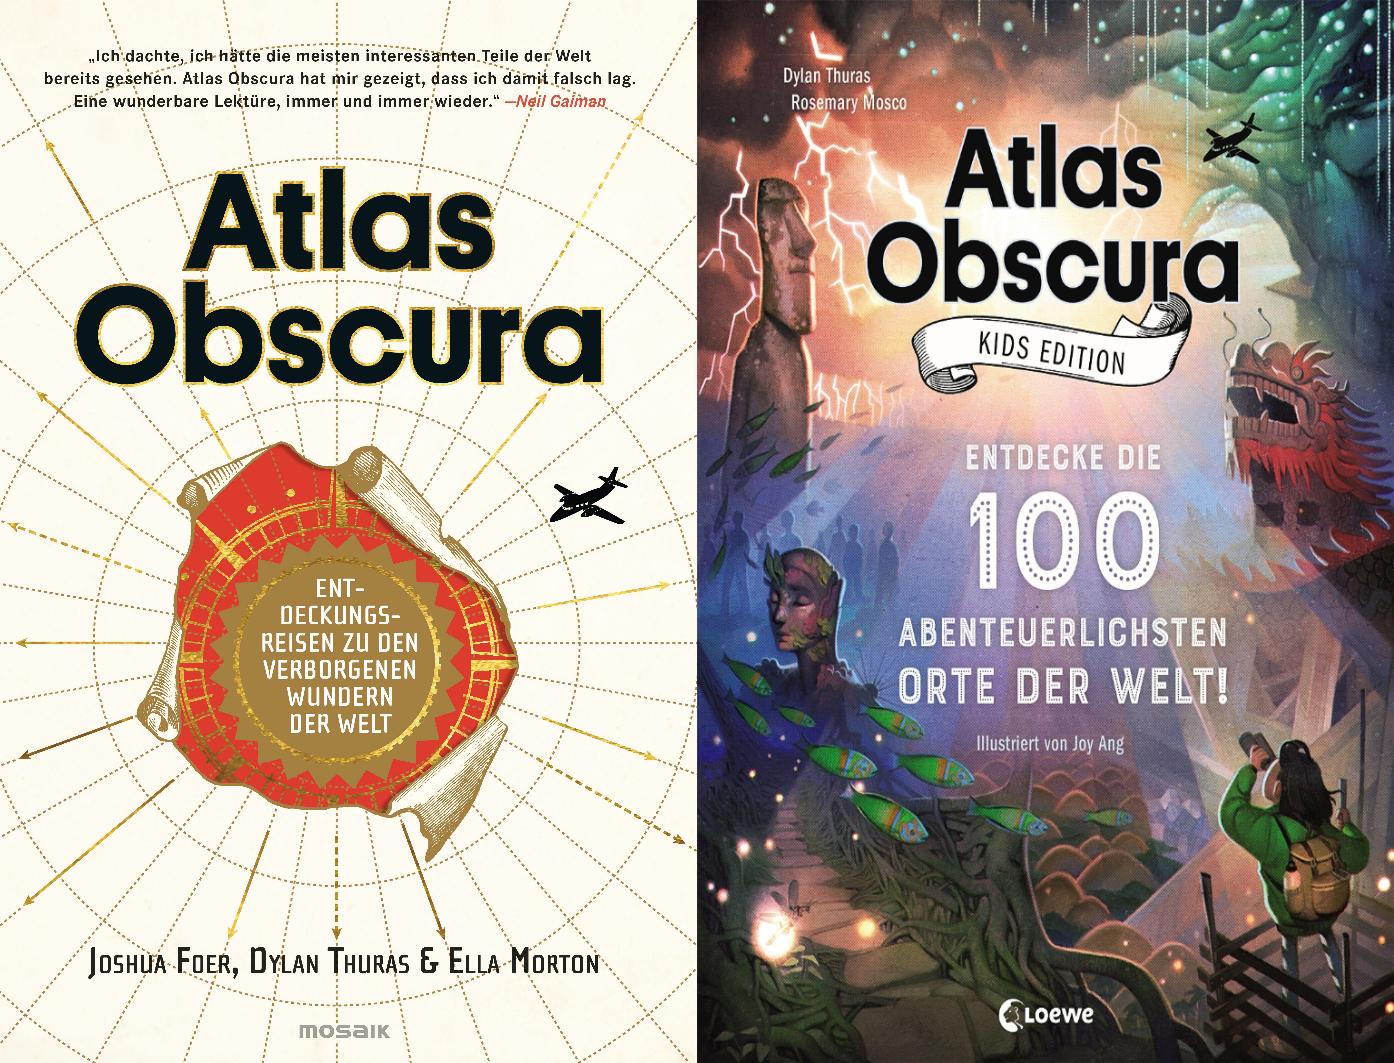 Atlas Obscura und Atlas Obscura Kids Edition im Set + 1 exklusives Postkartenset